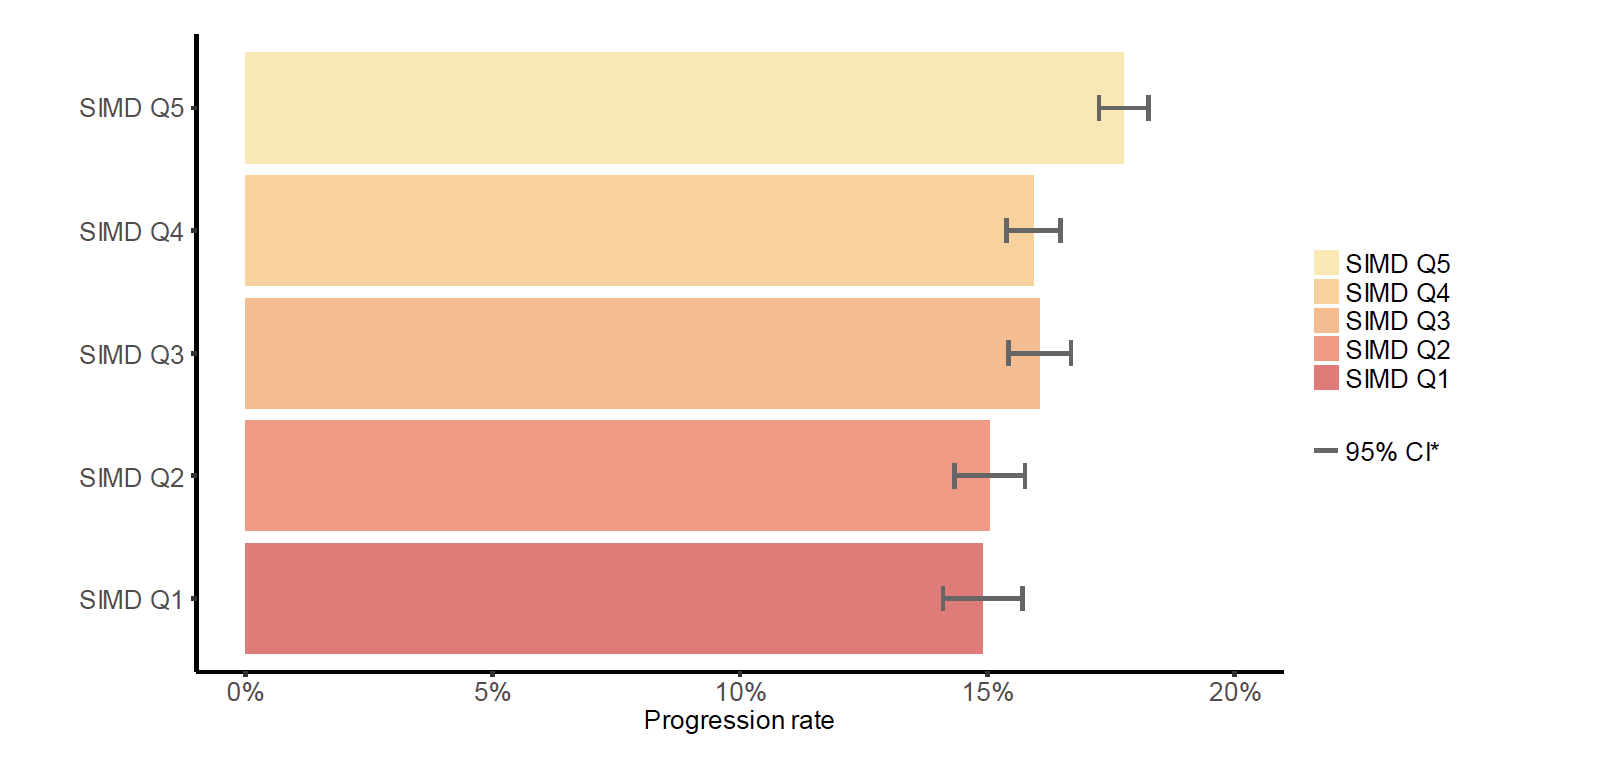 Figure 2: Percentage of first degree graduates progressing to postgraduate study, by SIMD quintile